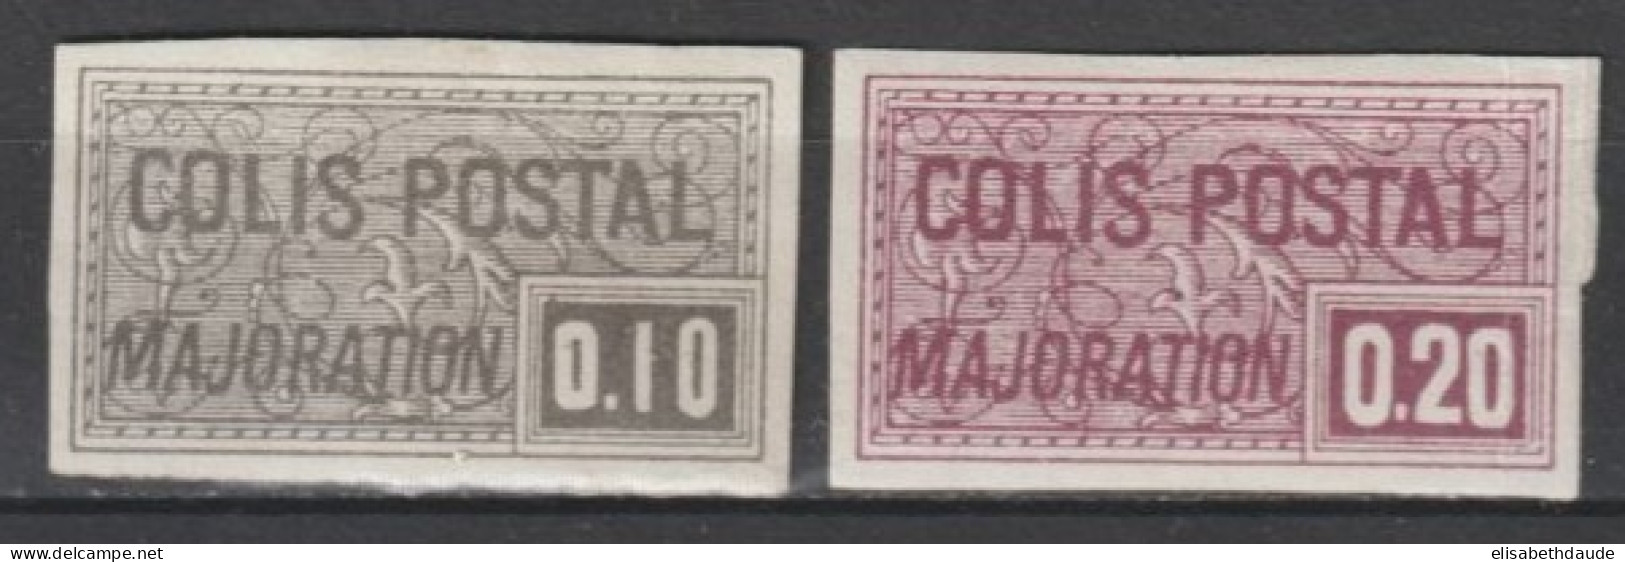 COLIS POSTAUX - 1938 - YVERT N° 155+158 VARIETE NON DENTELES ! * MH - COTE MAURY 2009 = 82 EUR. - Ongebruikt